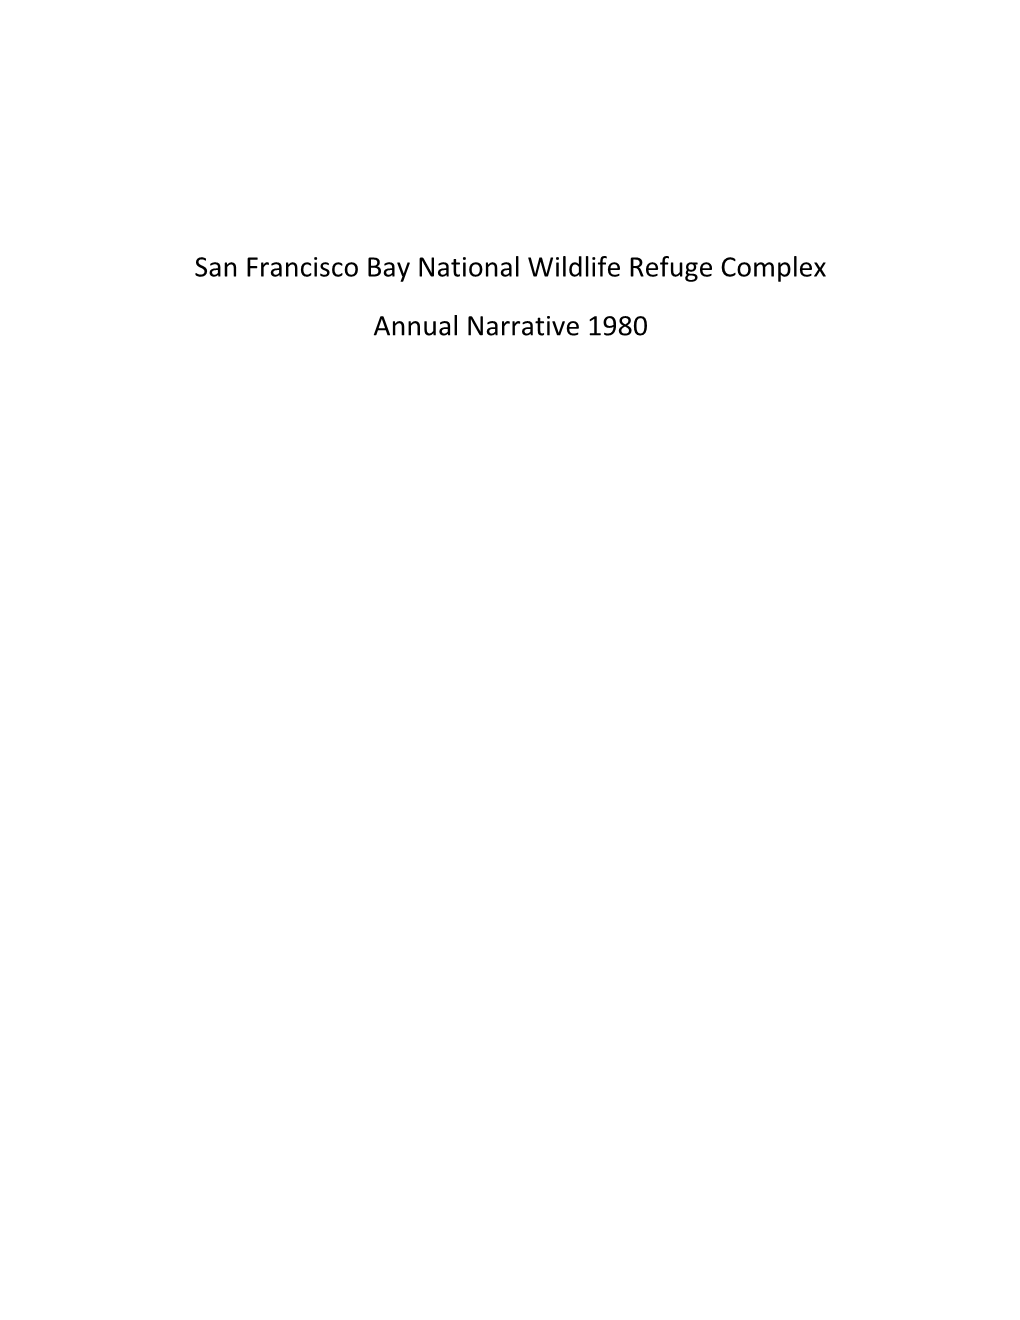 San Francisco Bay National Wildlife Refuge Complex Annual Narrative 1980